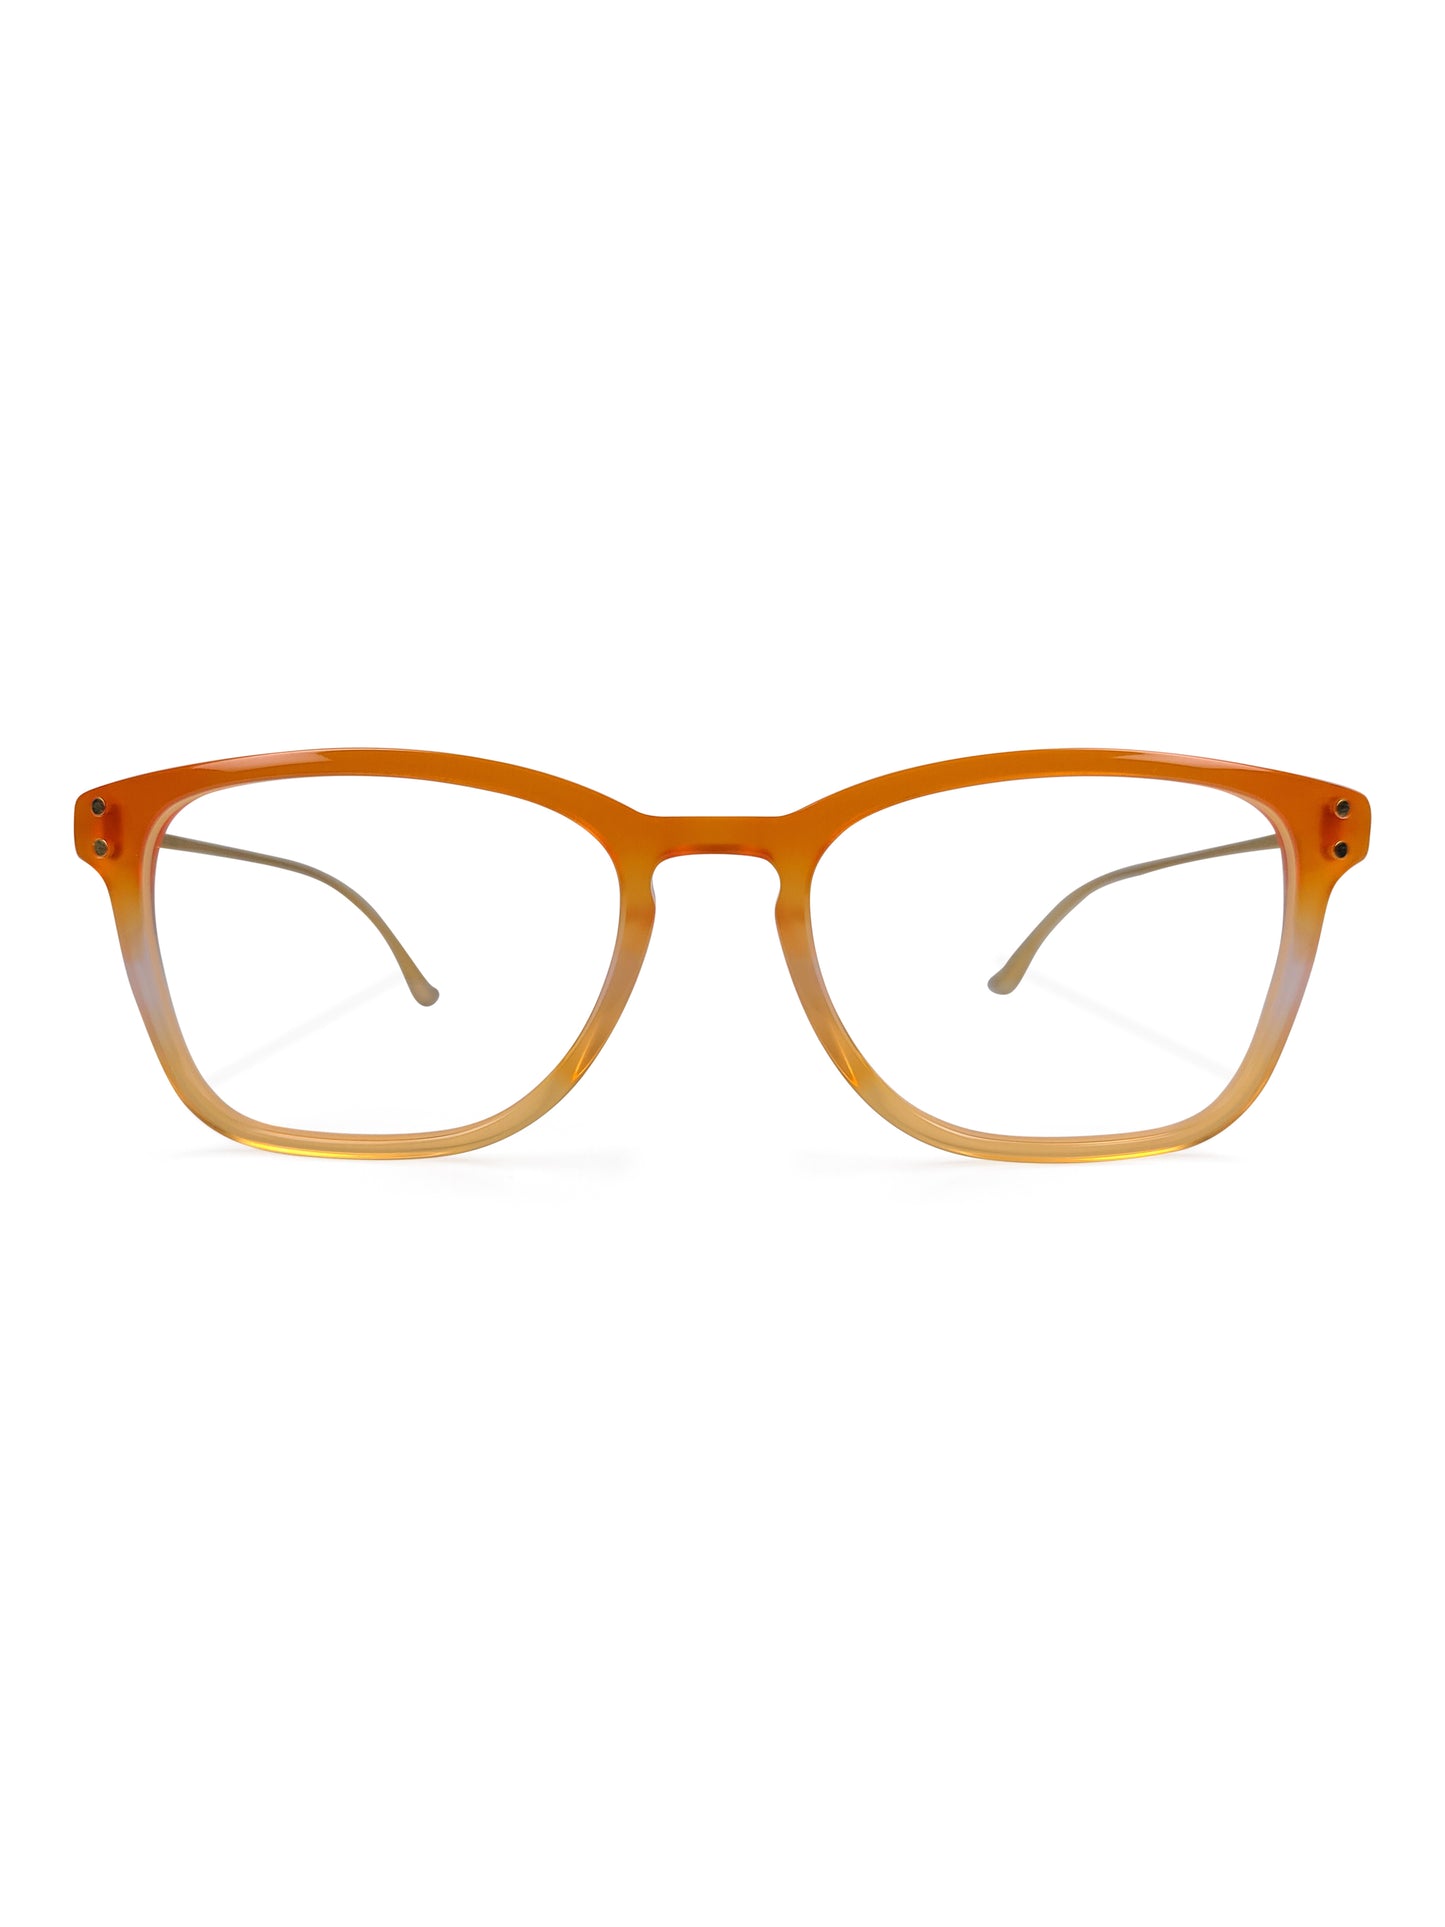 Libra Eyeglasses